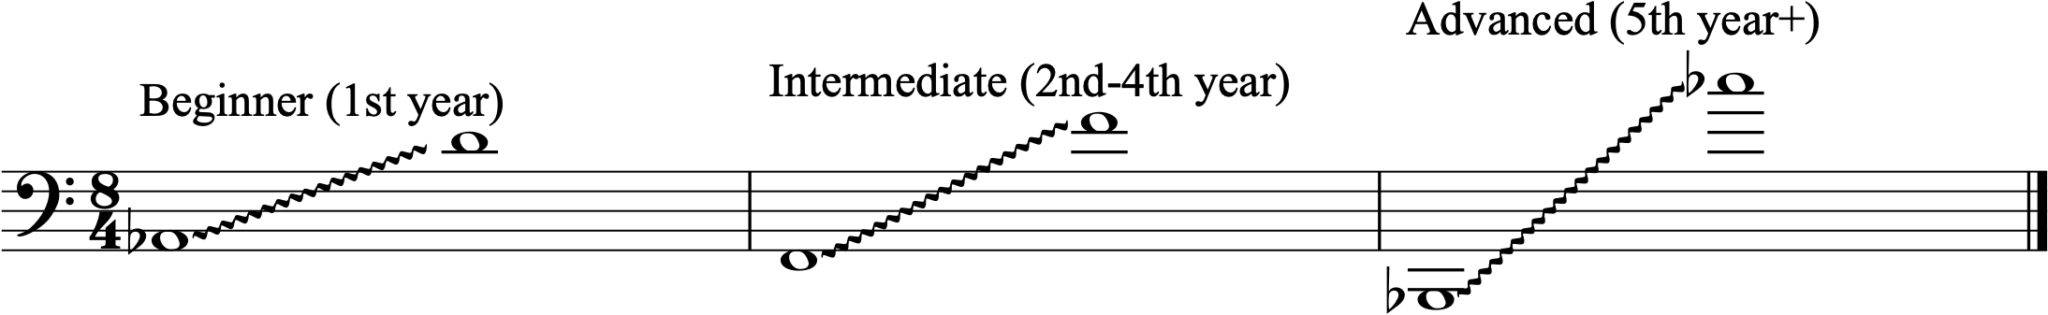 trombone bbfeb position chart